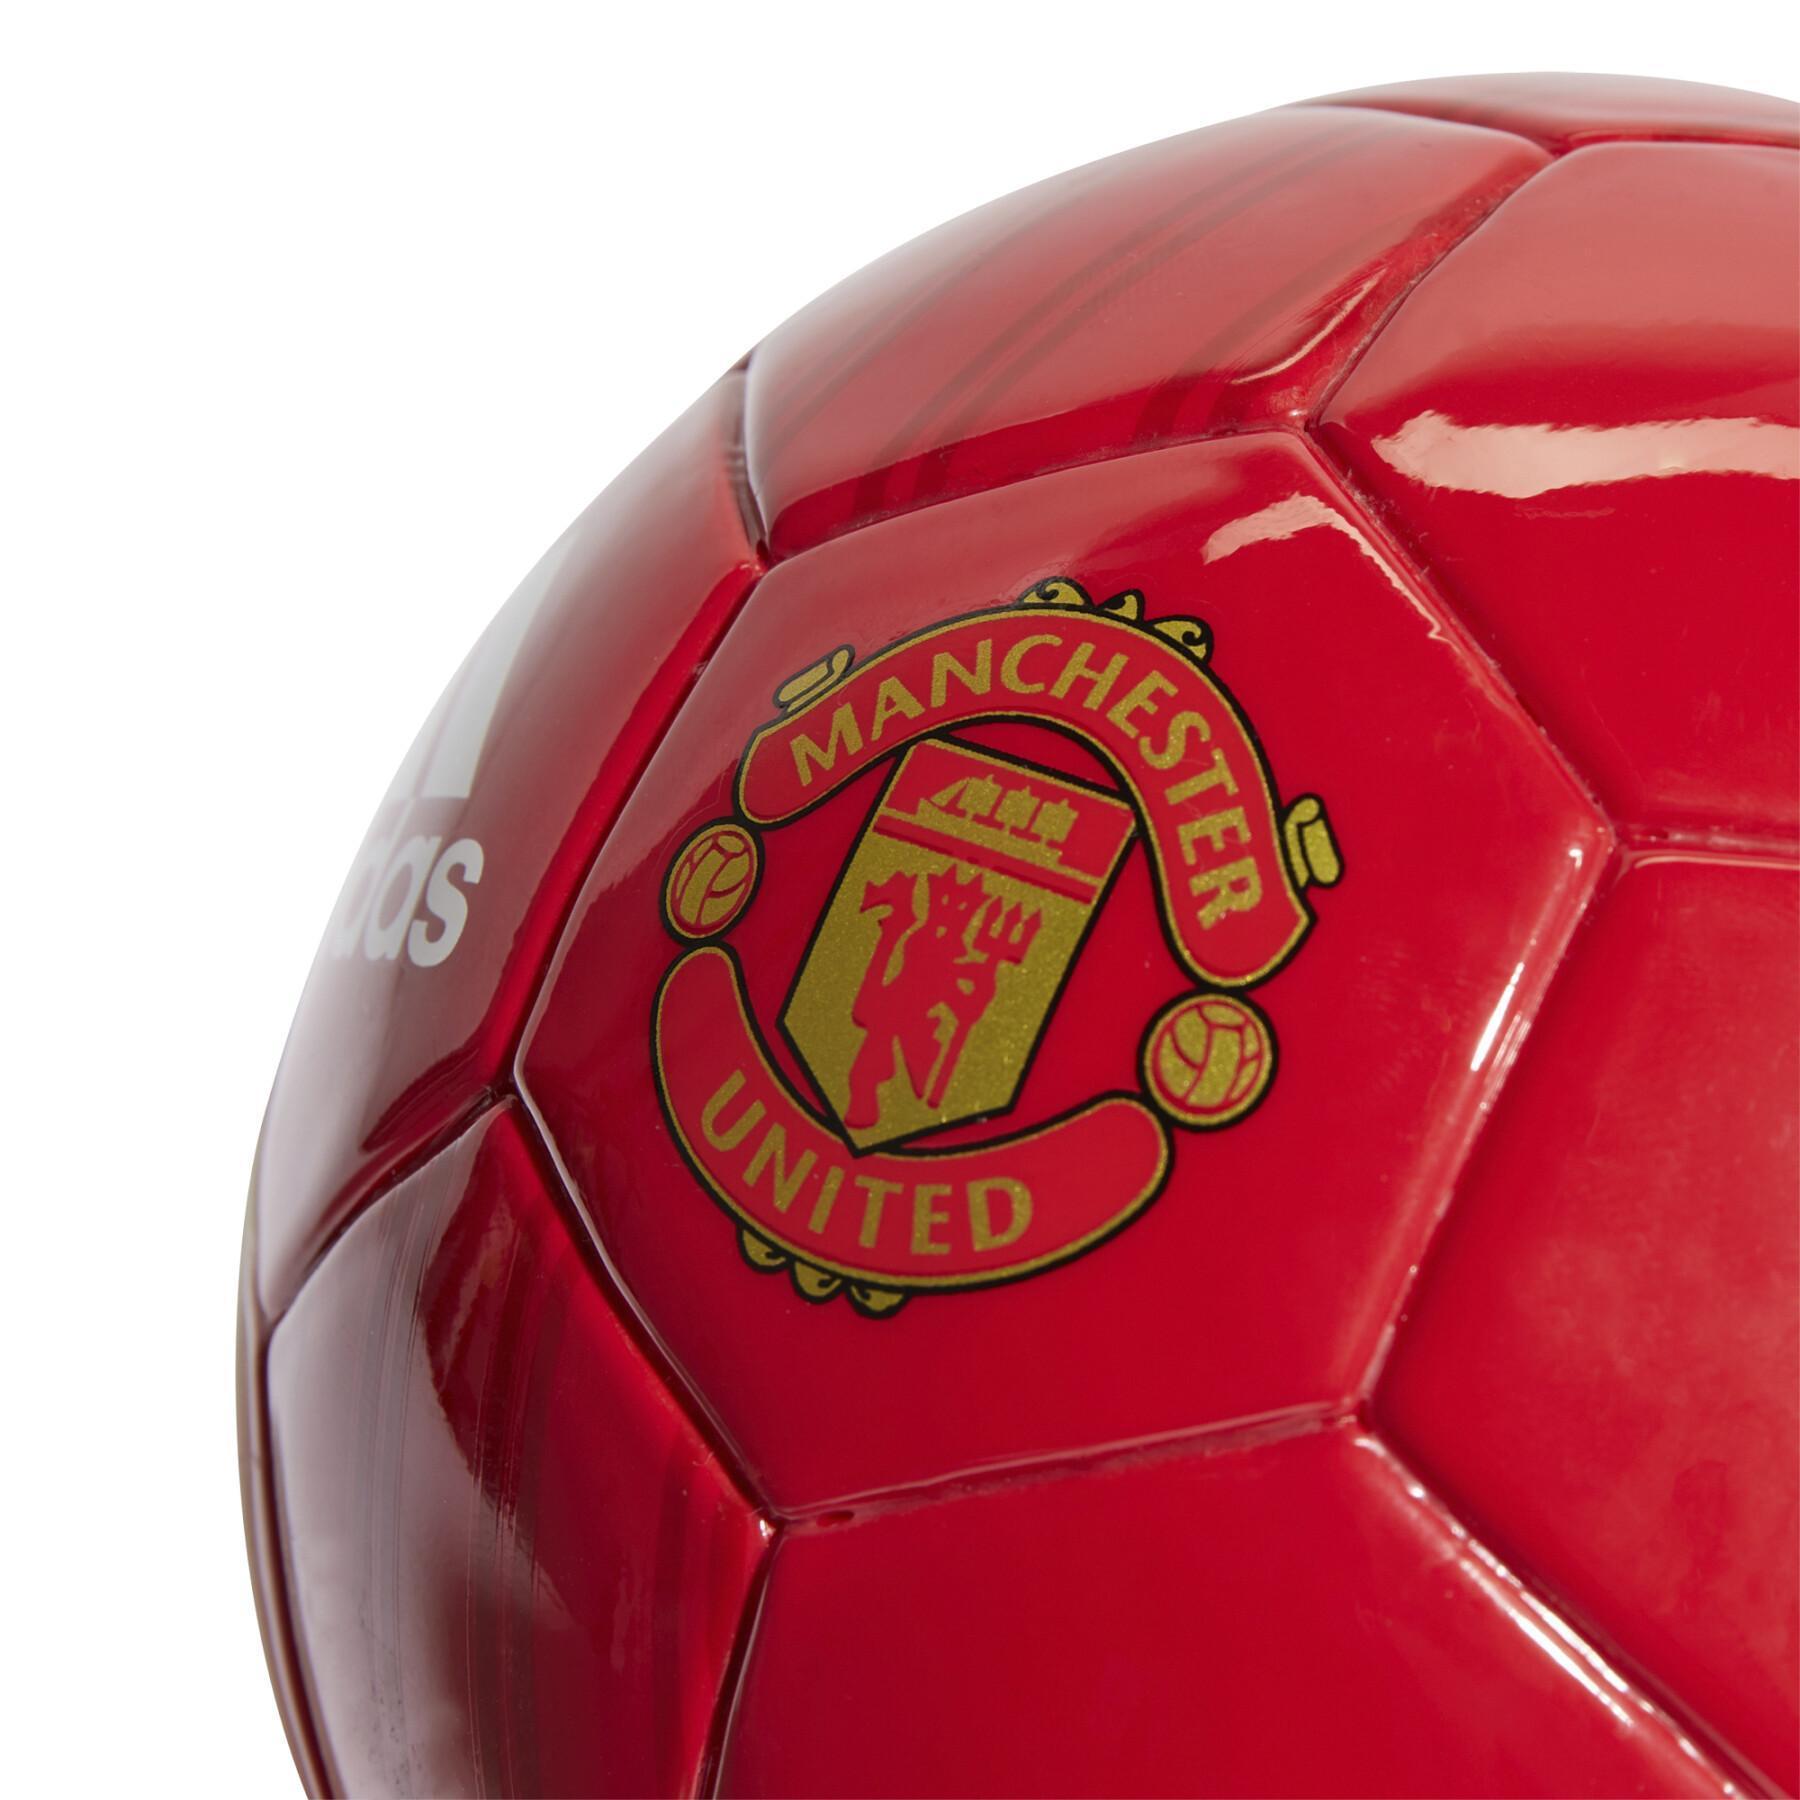 Home mini ball Manchester United